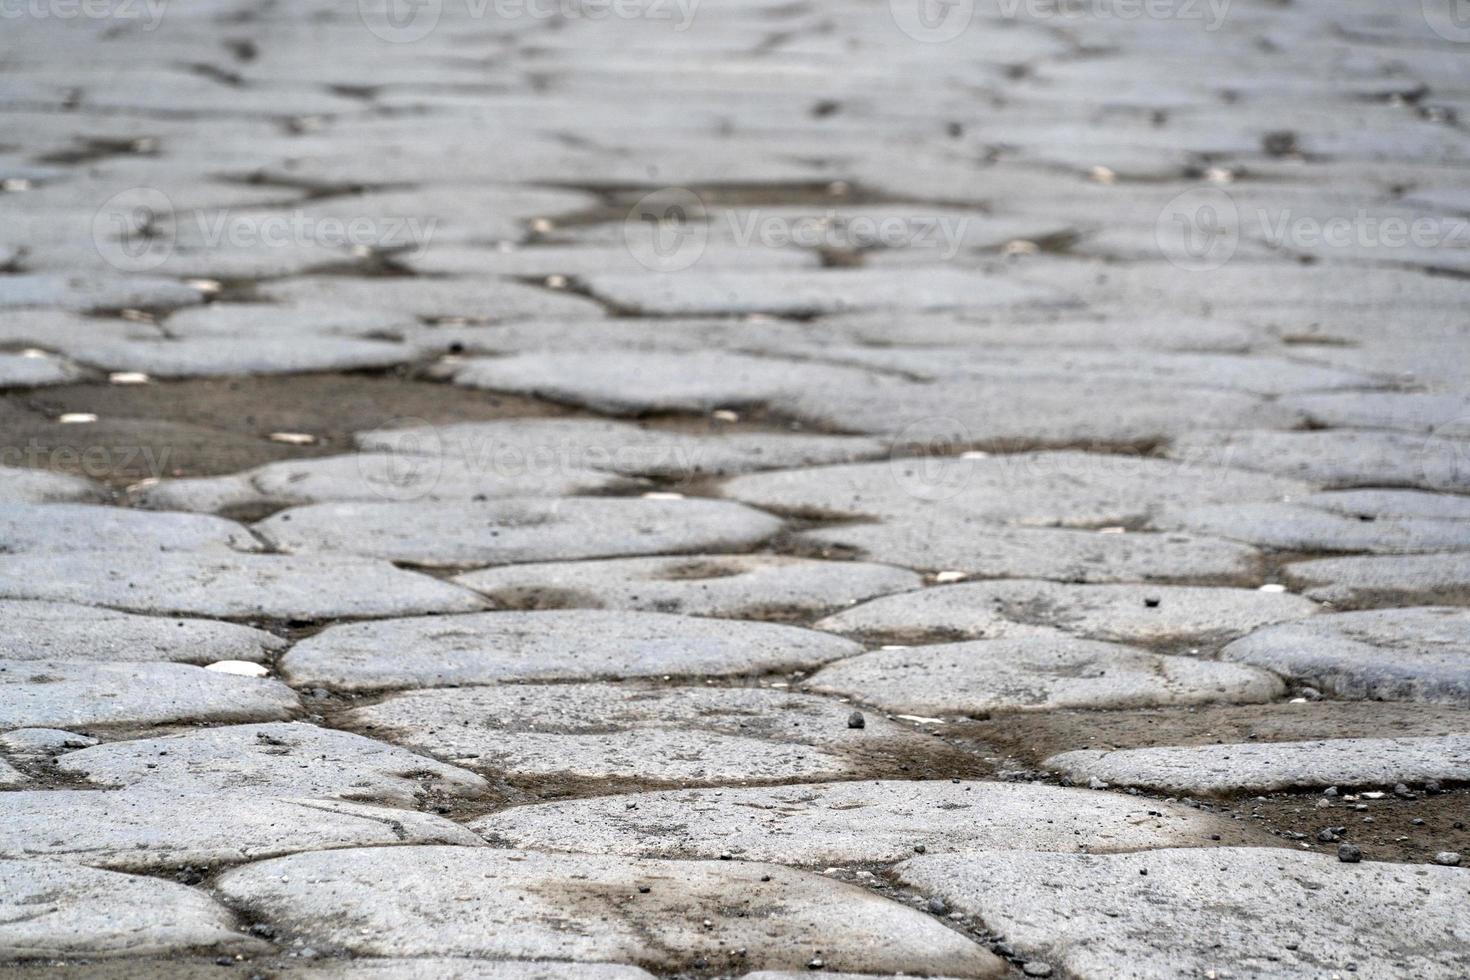 pompeï ruïnes Romeins pad straat voetganger wandelen foto